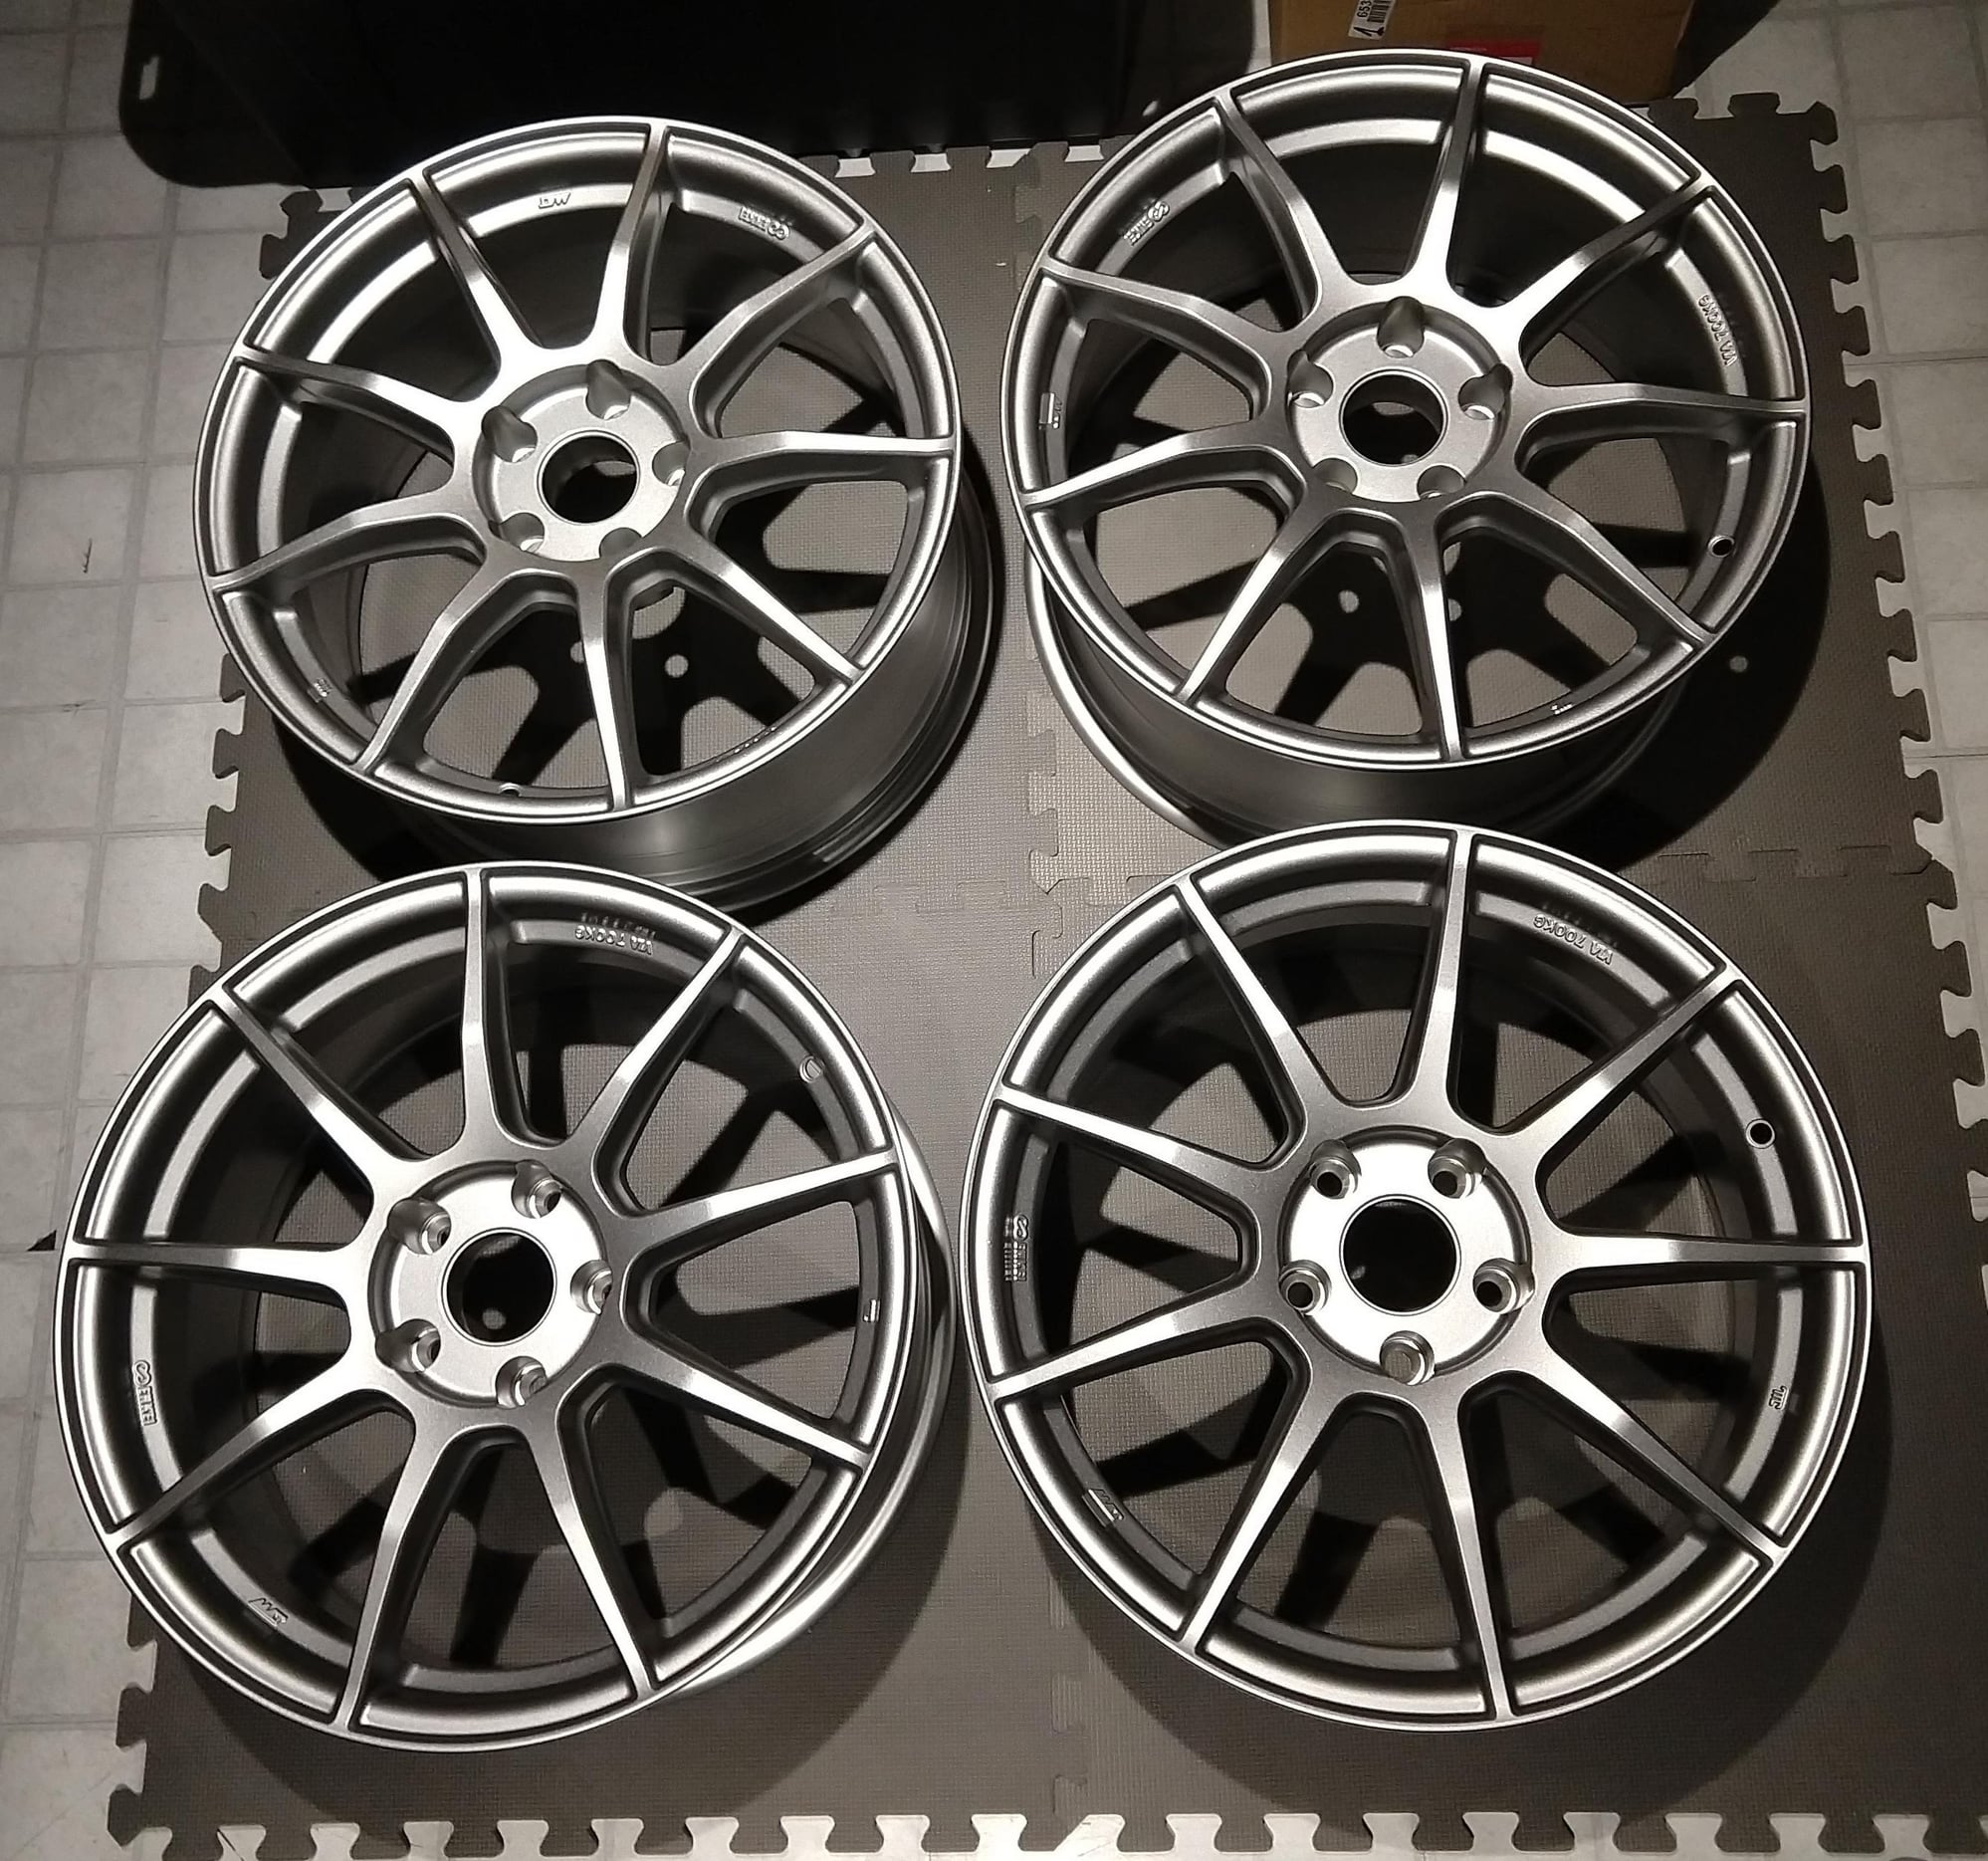 Wheels and Tires/Axles - SOLD: Enkei TS9 wheels 18x8.5 - New! - New - 2004 to 2008 Acura TL - Novi, MI 48375, United States